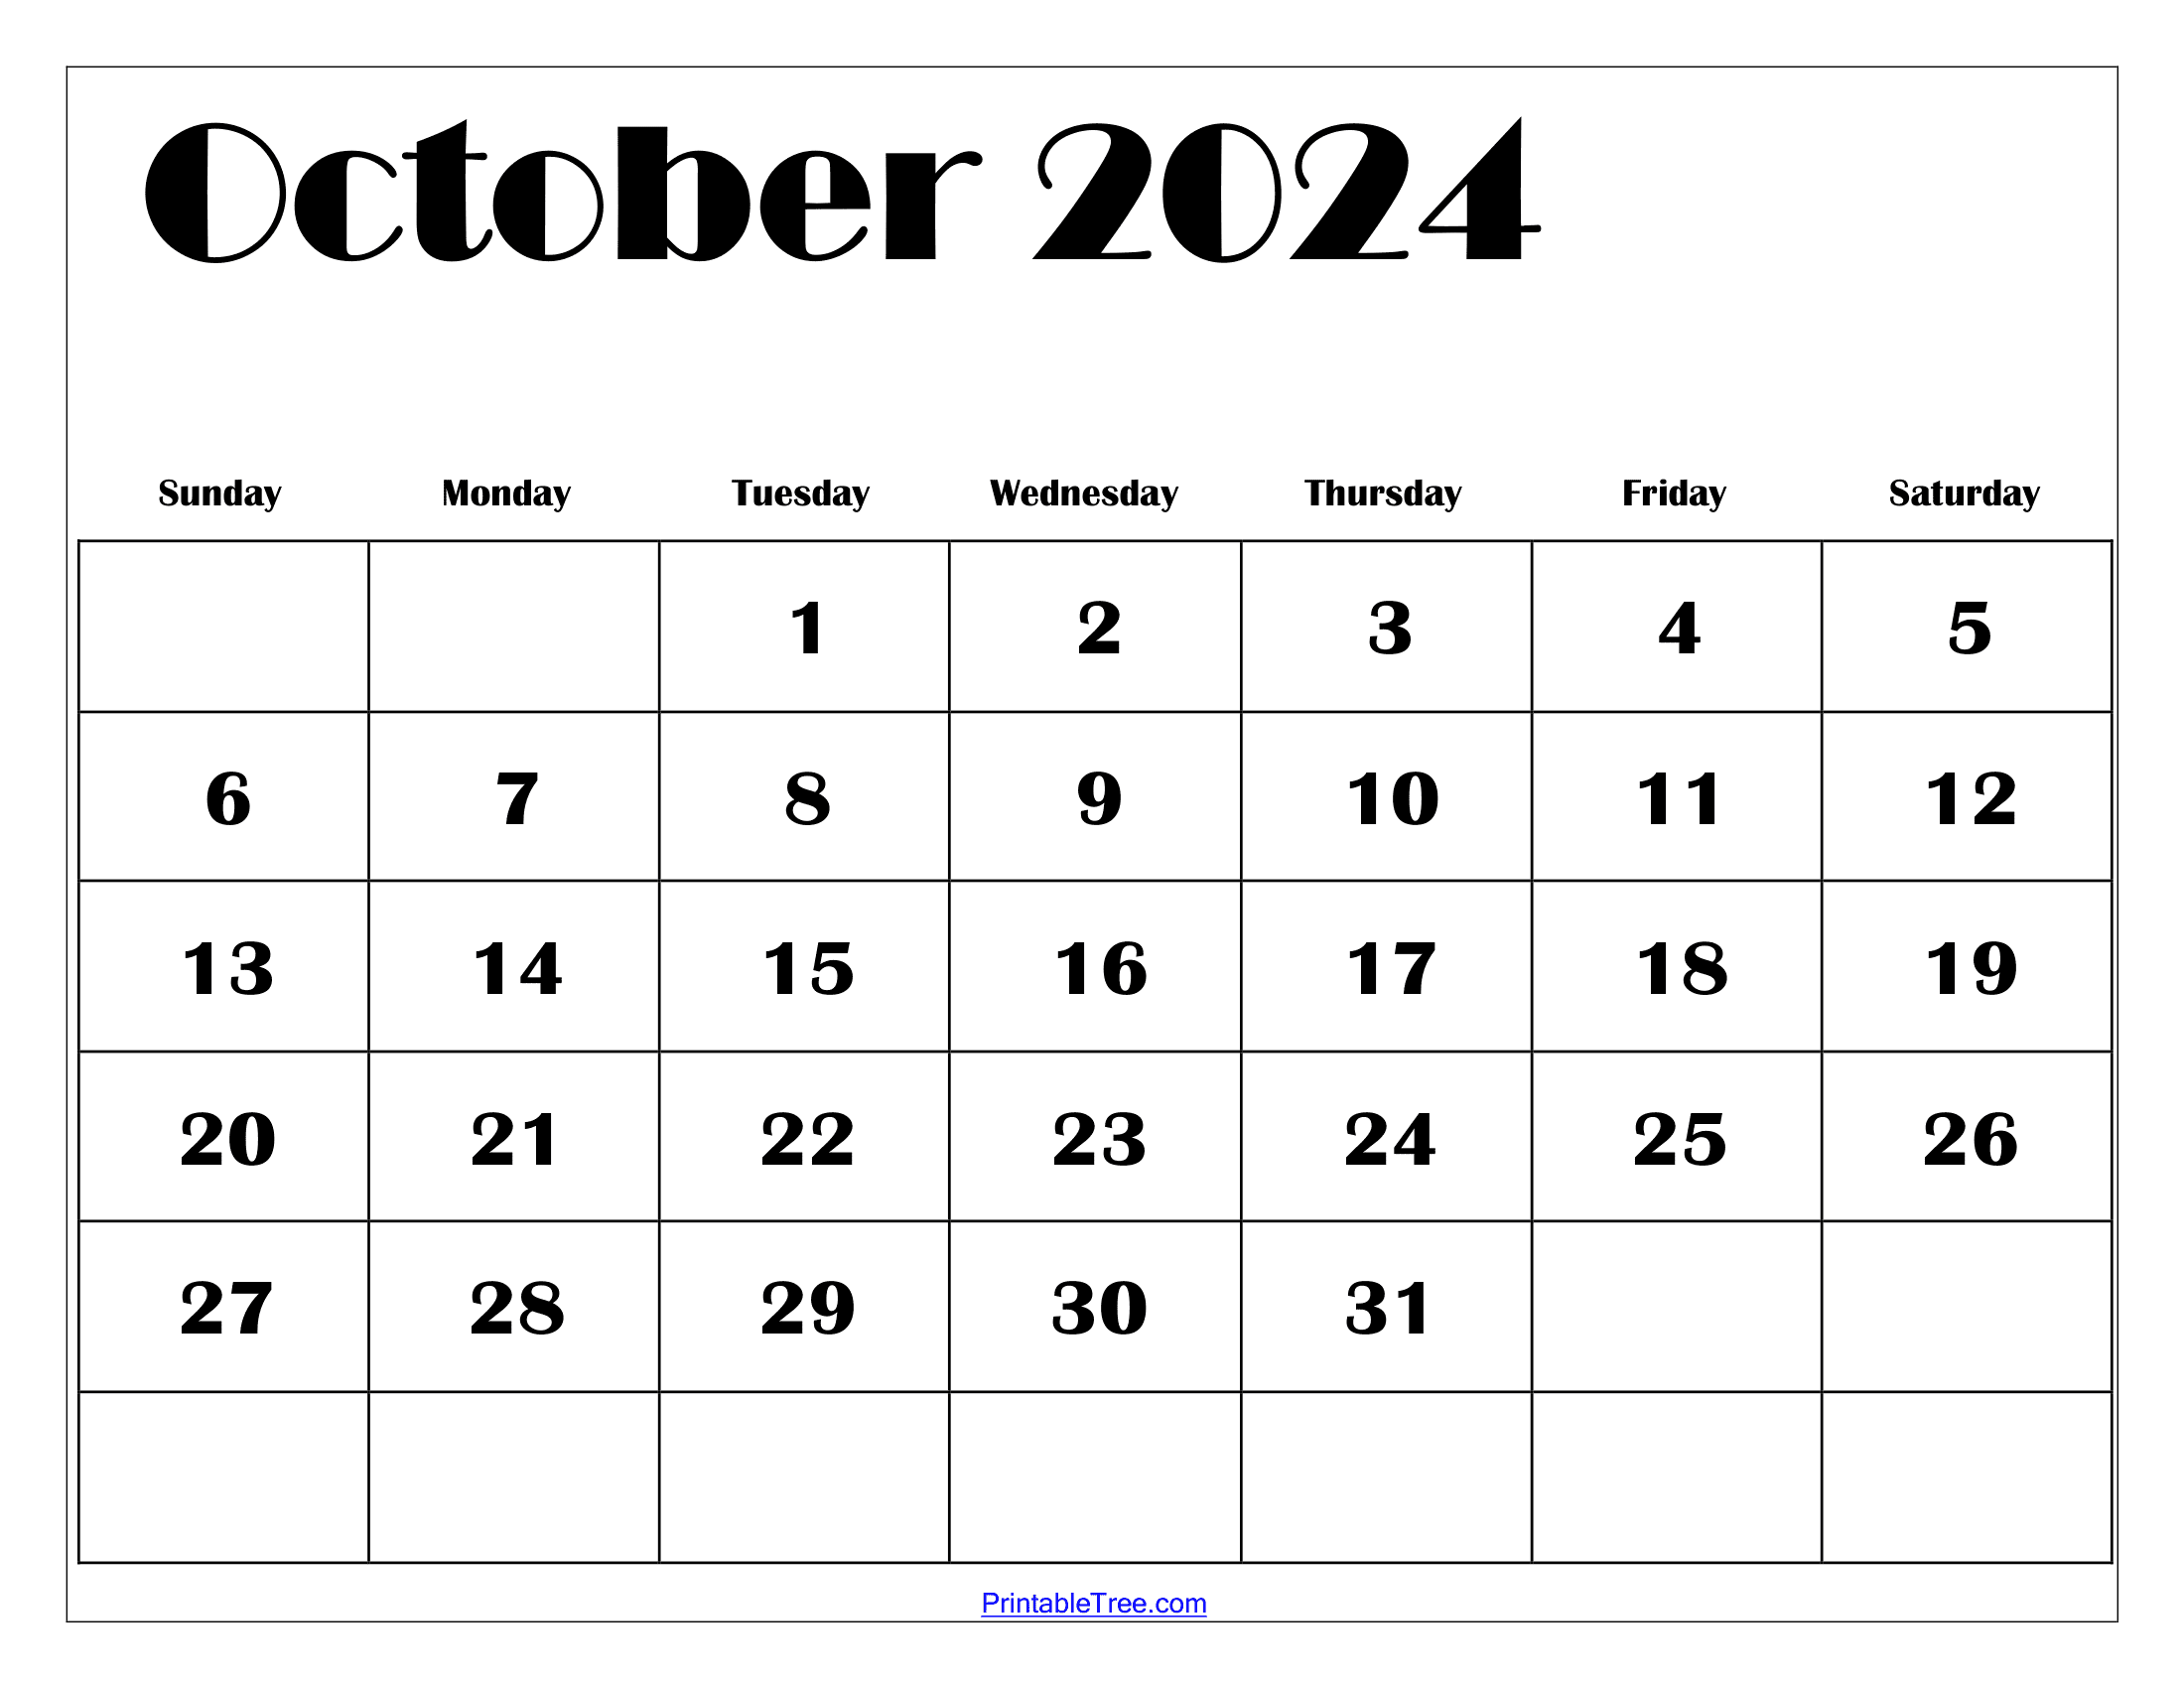 October 2024 Calendar Printable Pdf Free Templates With Holidays for Free Printable Calendar 2024 October November December